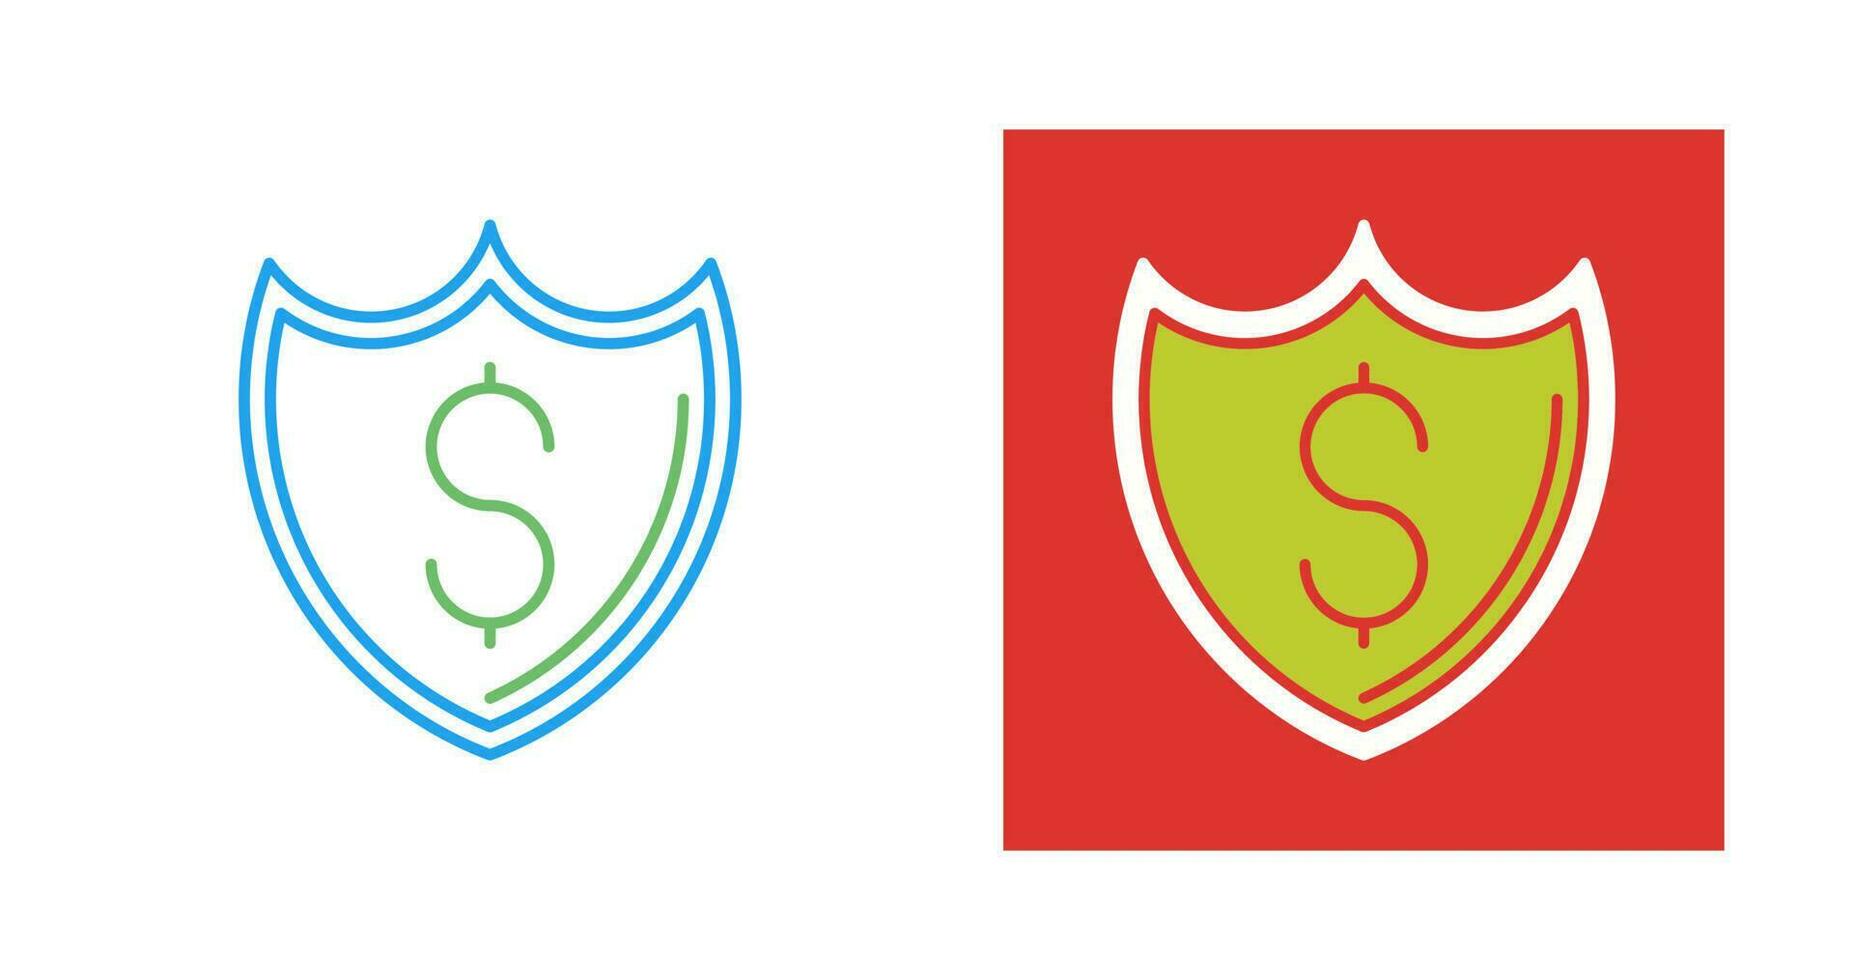 Money Protection Vector Icon